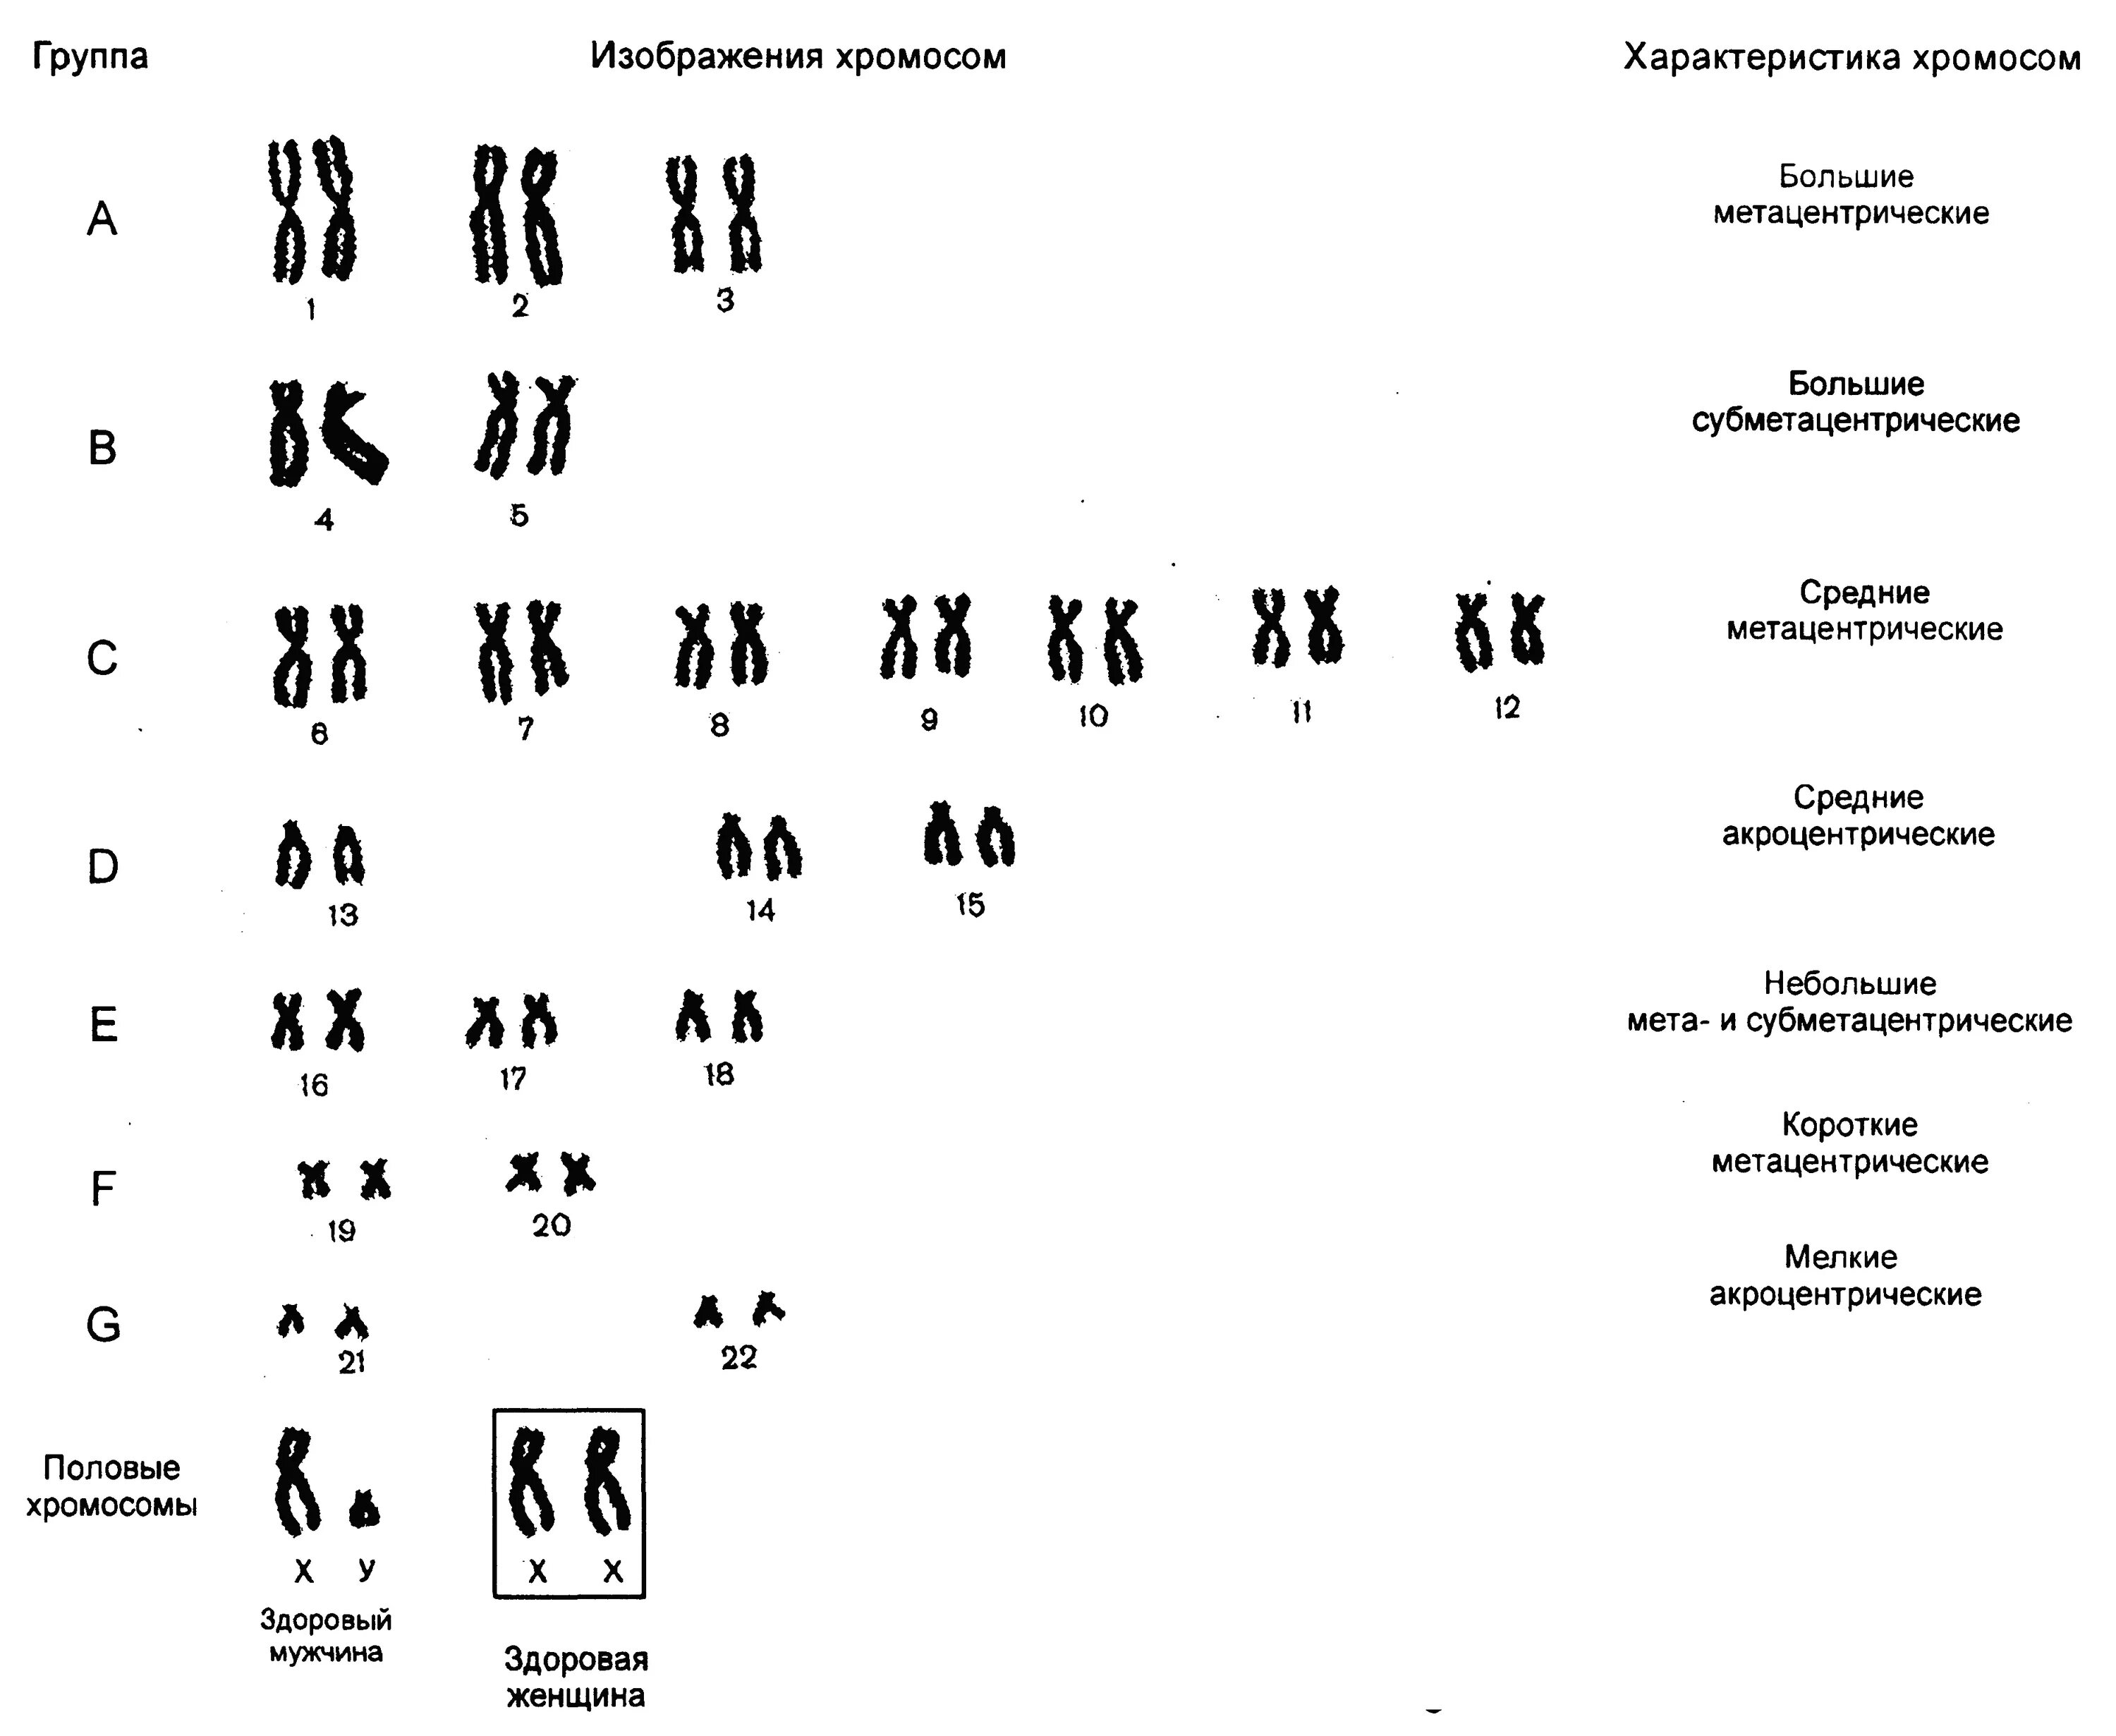 Характеристики хромосом человека. Метацентрические хромосомы в кариотипе человека. Кариограмма и кариотип человека. Кариограмма и идиограмма. Идиограмма кариотипа.